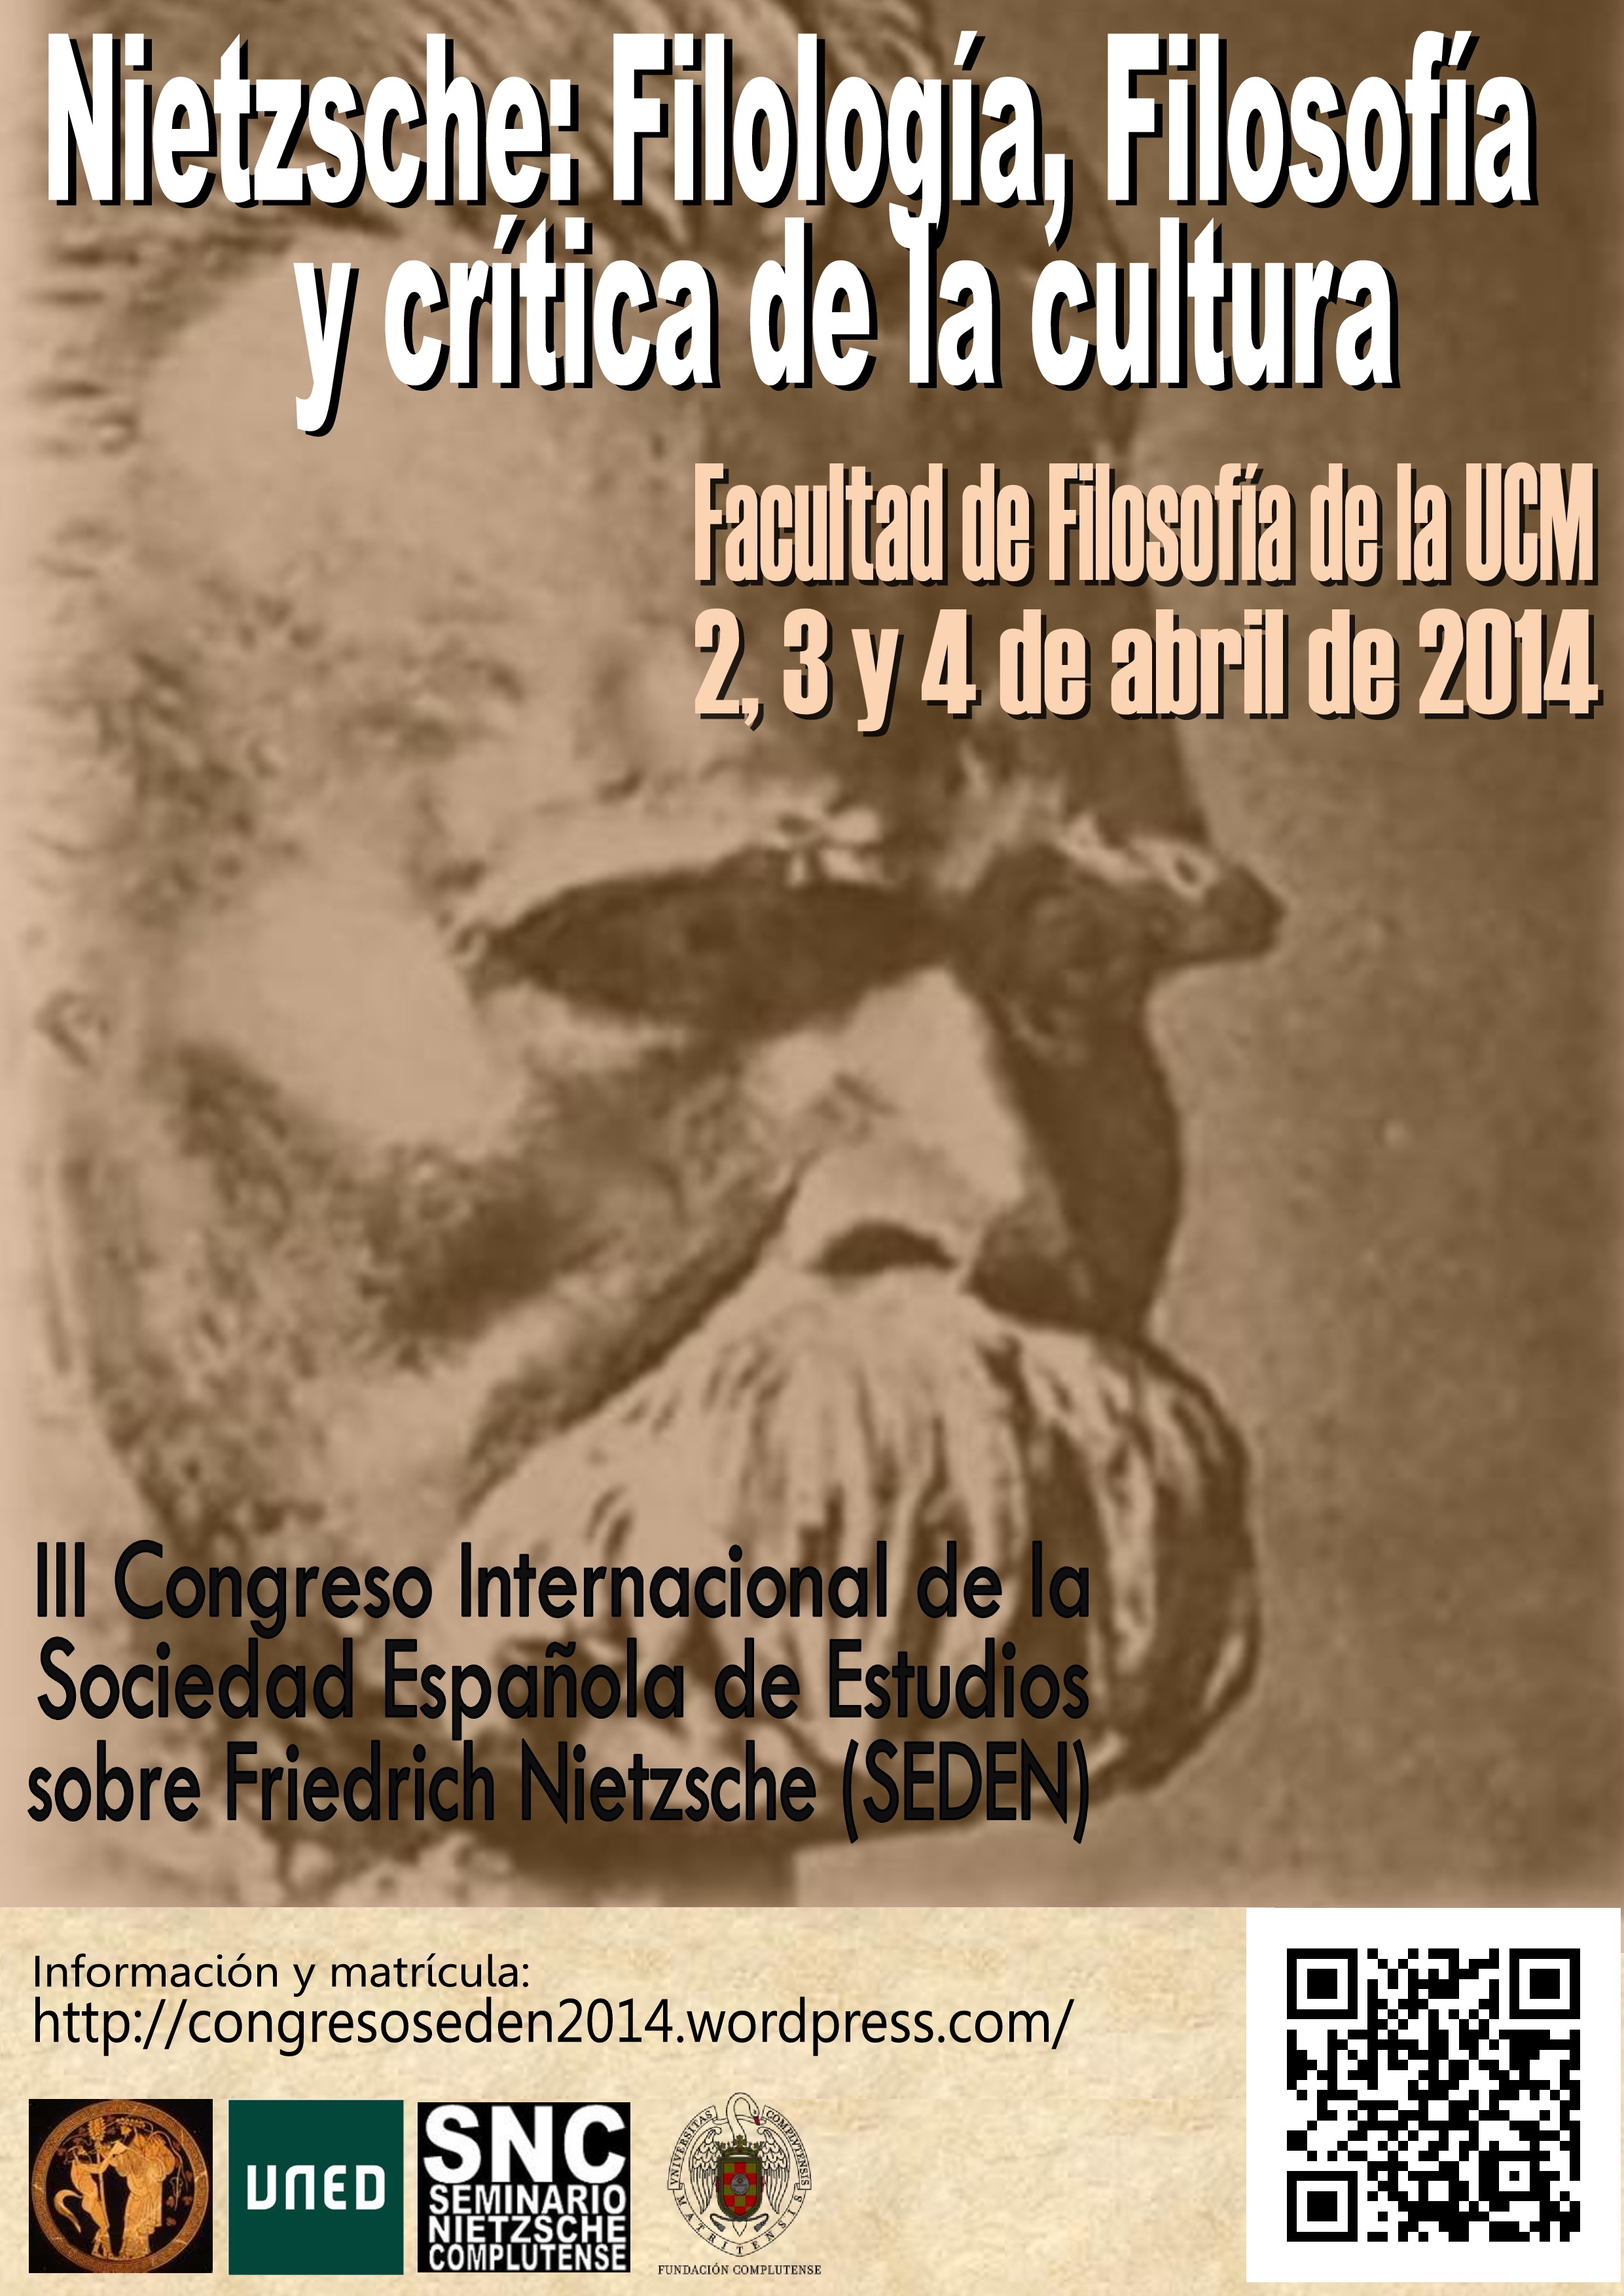 http://congresoseden2014.files.wordpress.com/2014/01/cartel-con-logo-fundacic3b3n-y-matrc3adcula.jpg